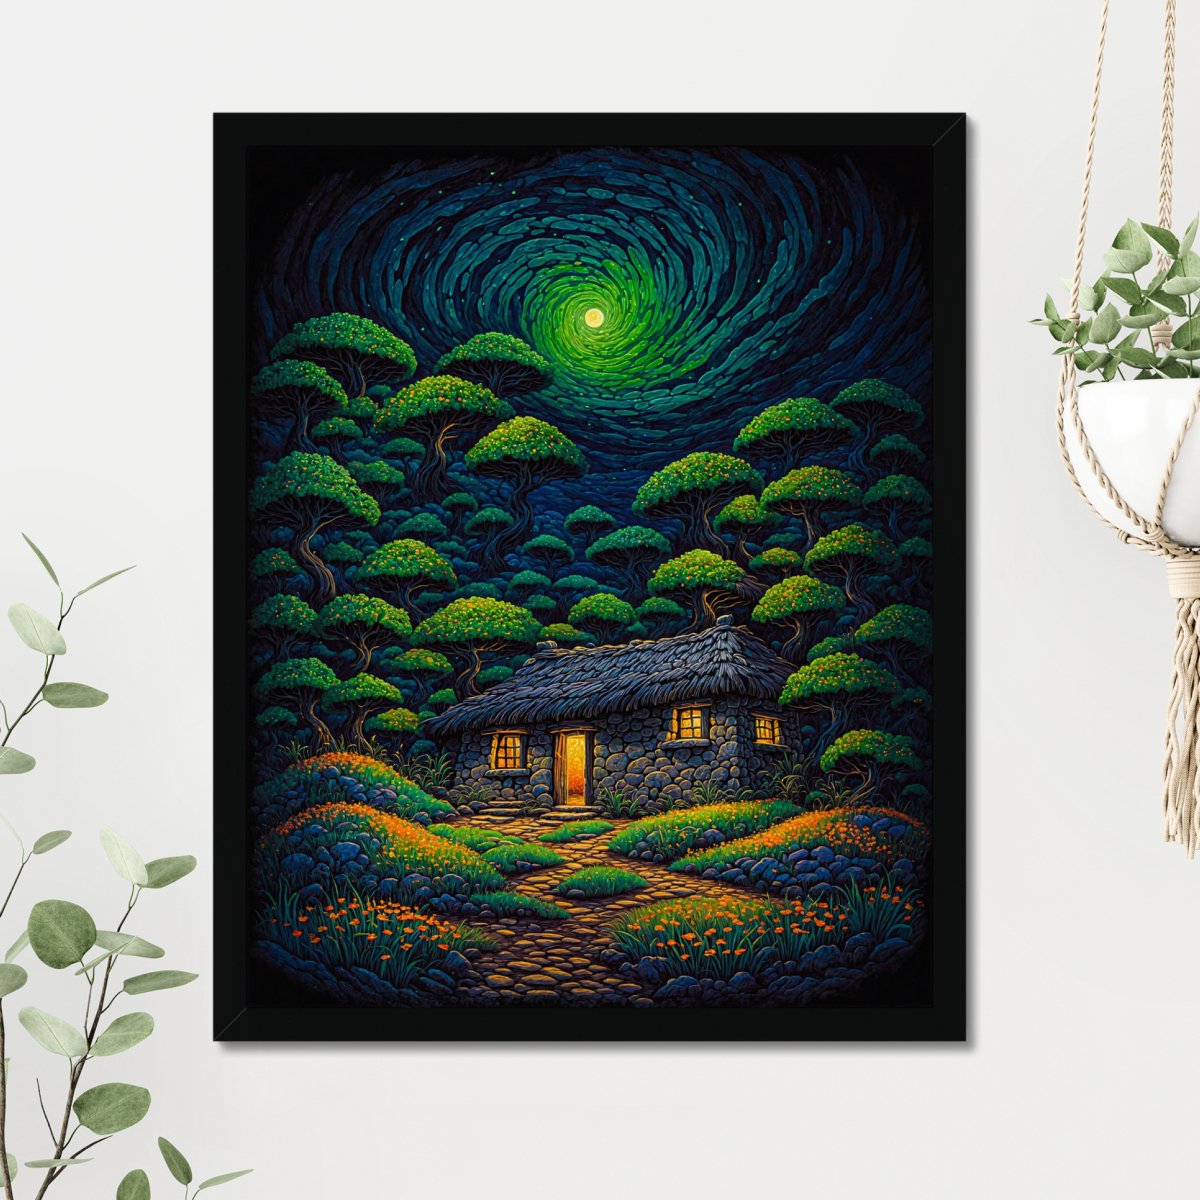 Emerald rock tavern - Art print - Poster - Ever colorful